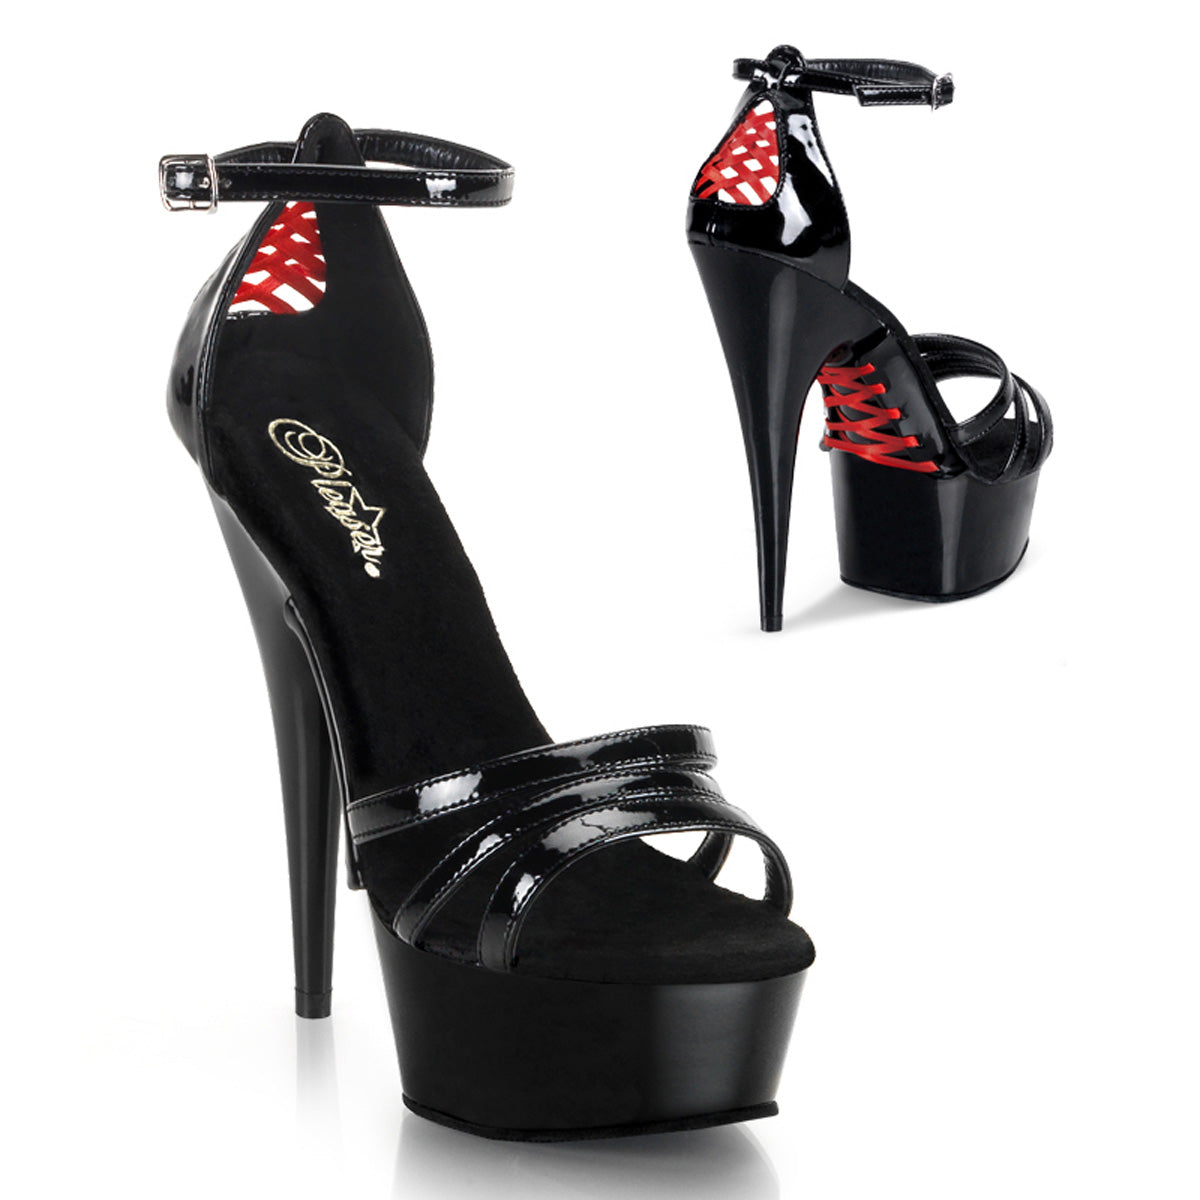 DELIGHT-662 6" Heel Black Patent Pole Dancing Platforms-Pleaser- Sexy Shoes